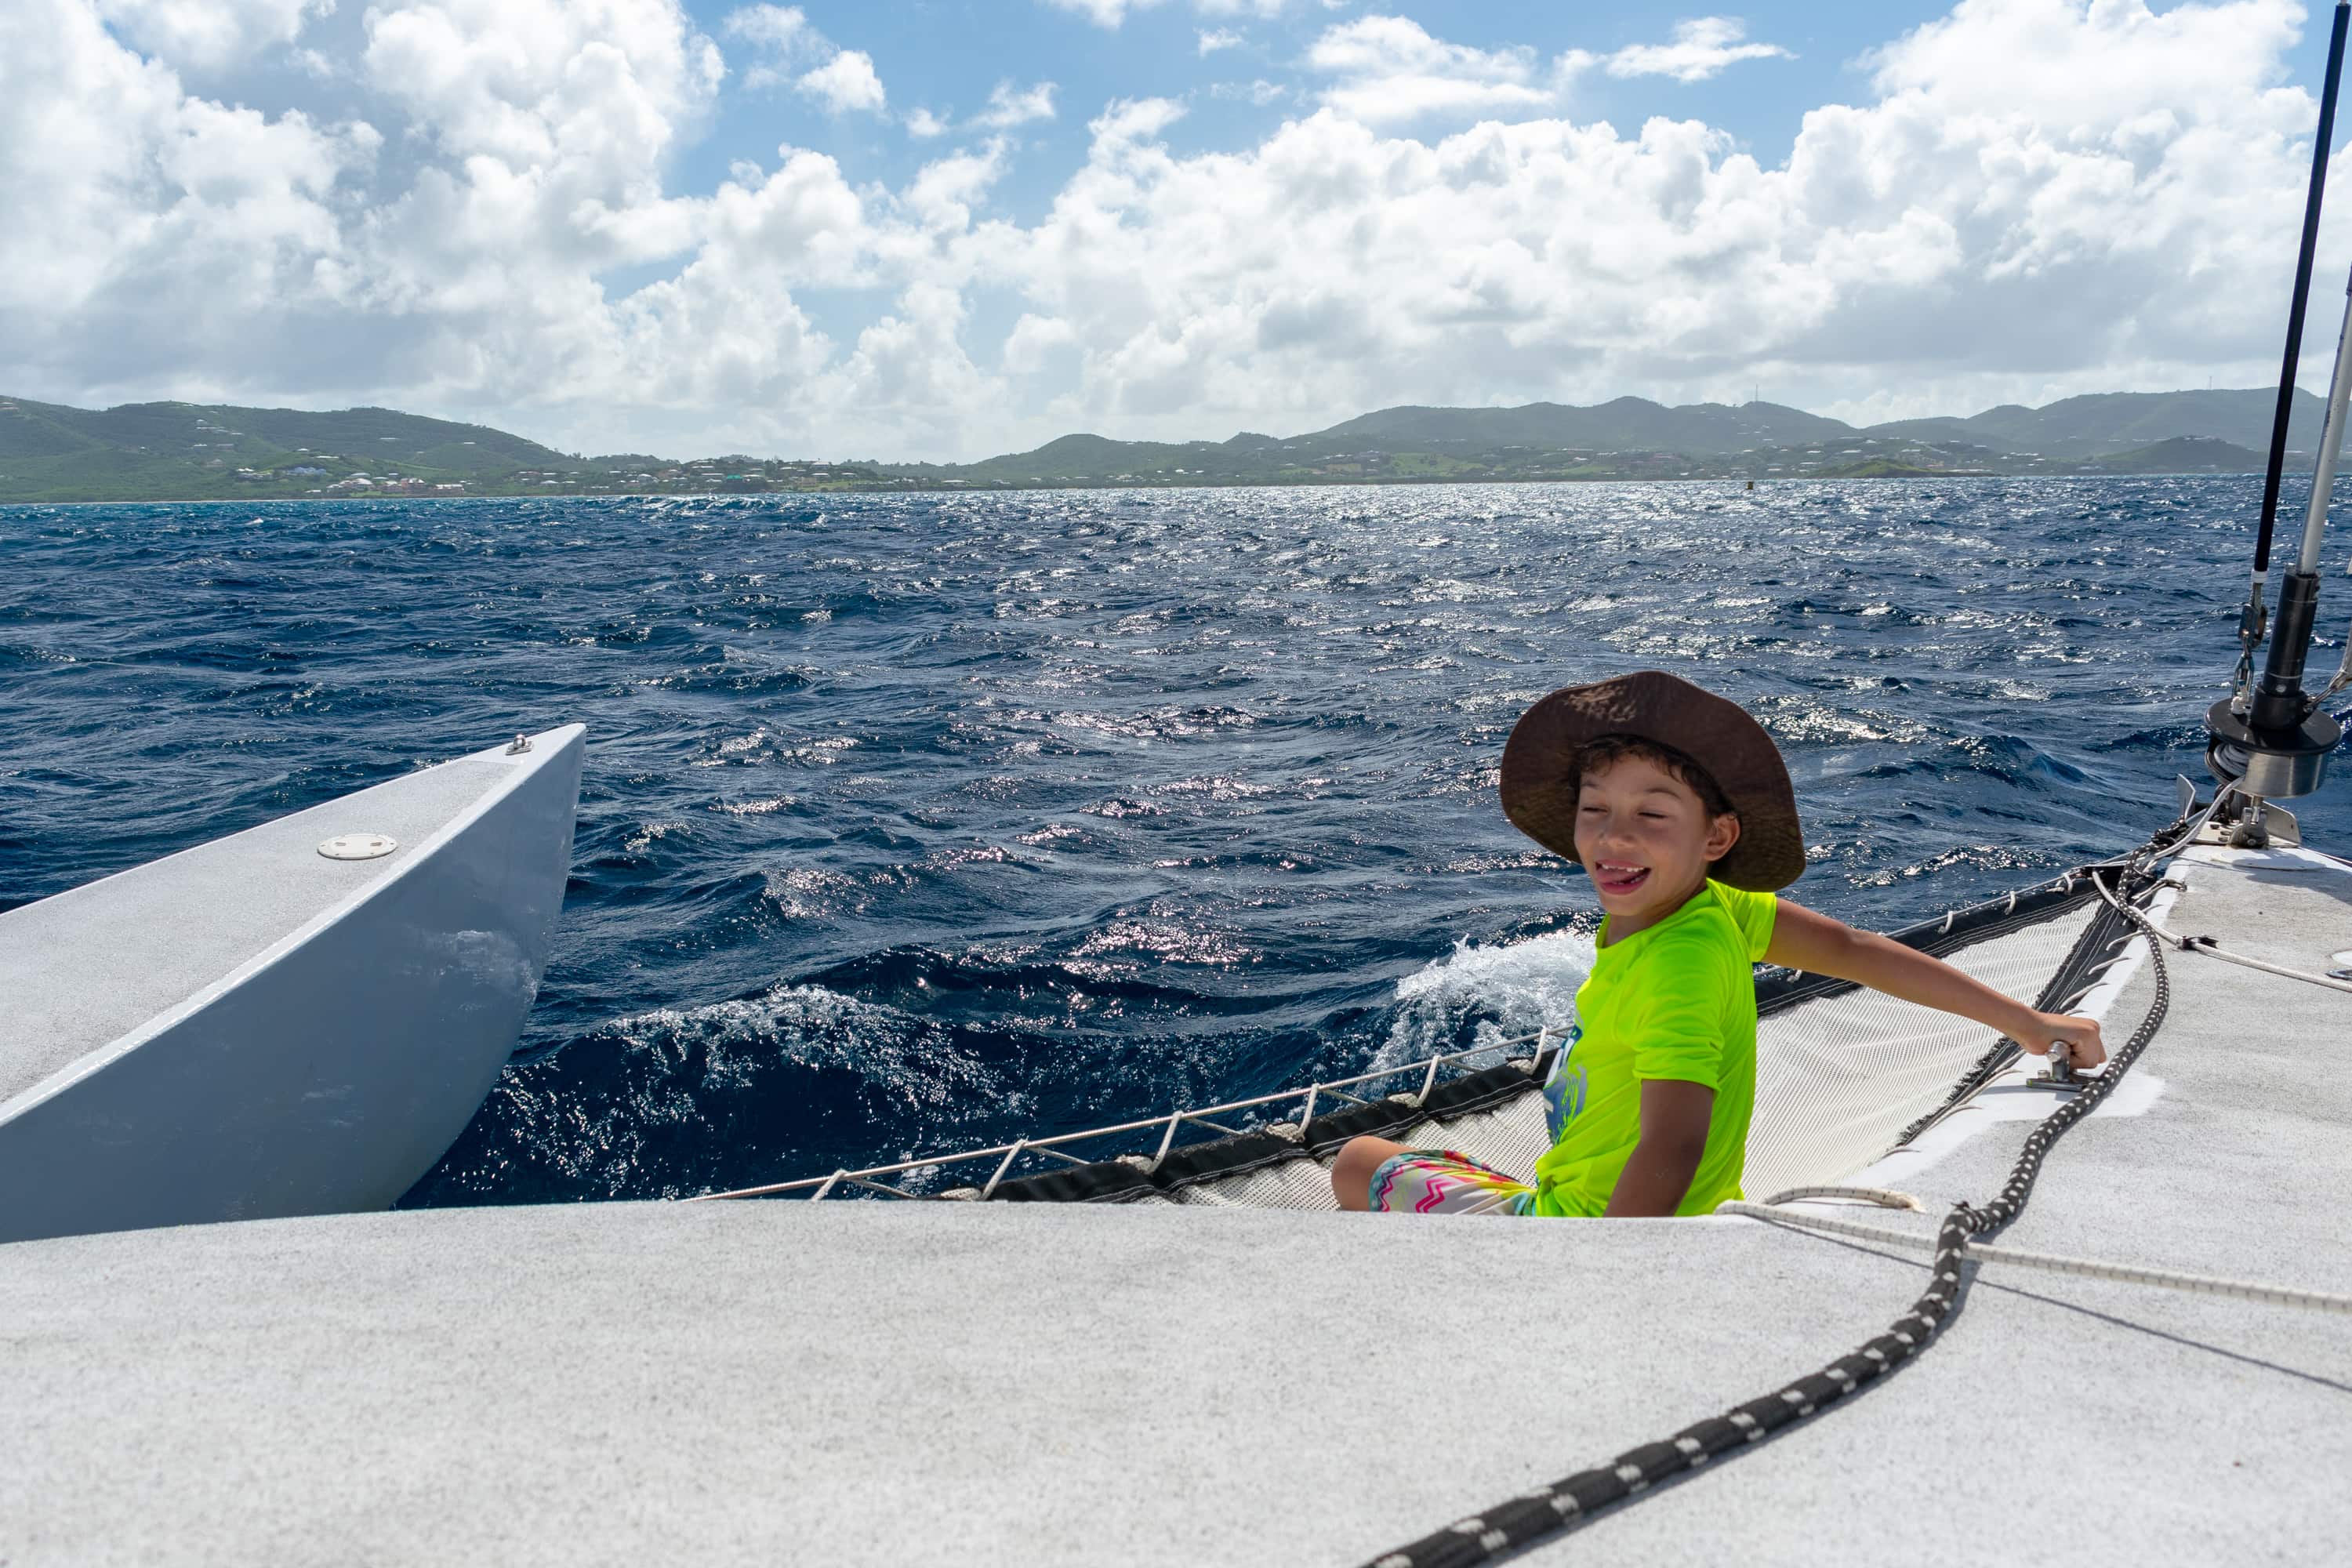 Caribbean Sailing yields smiles | SBPR